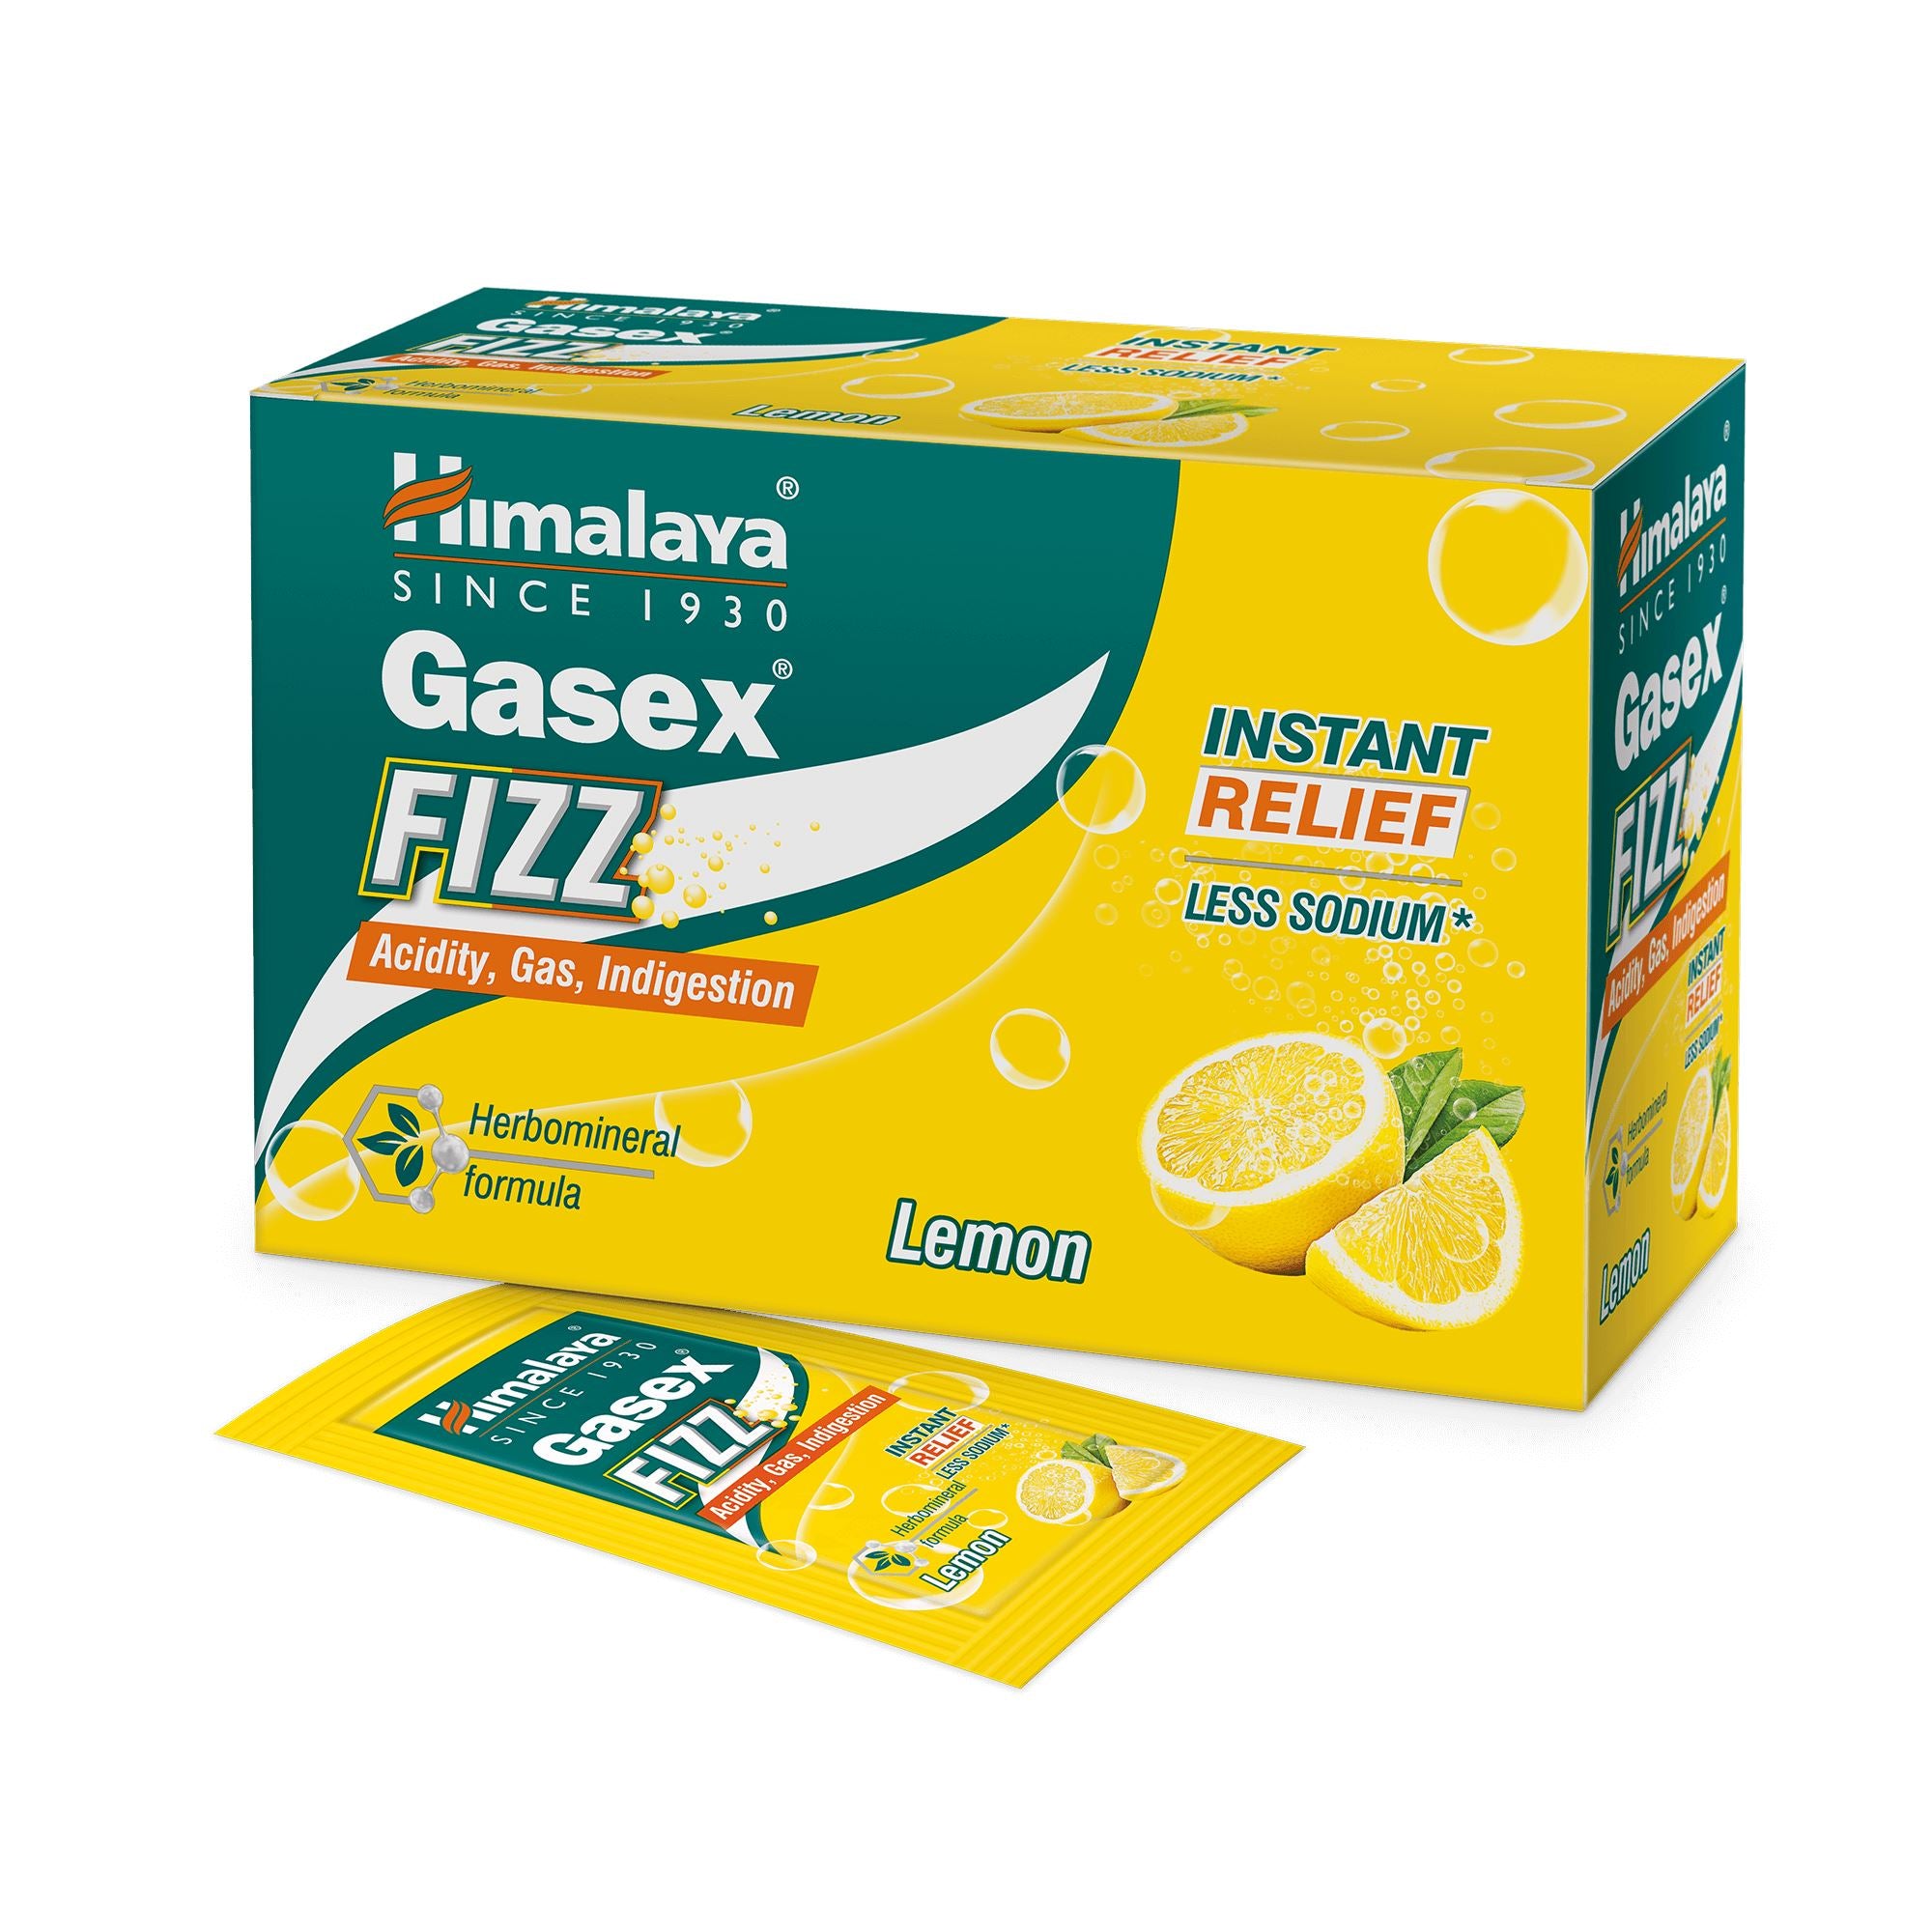 Himalaya Gasex Fizz (Lemon) 10s - Instant Relief from Acidity